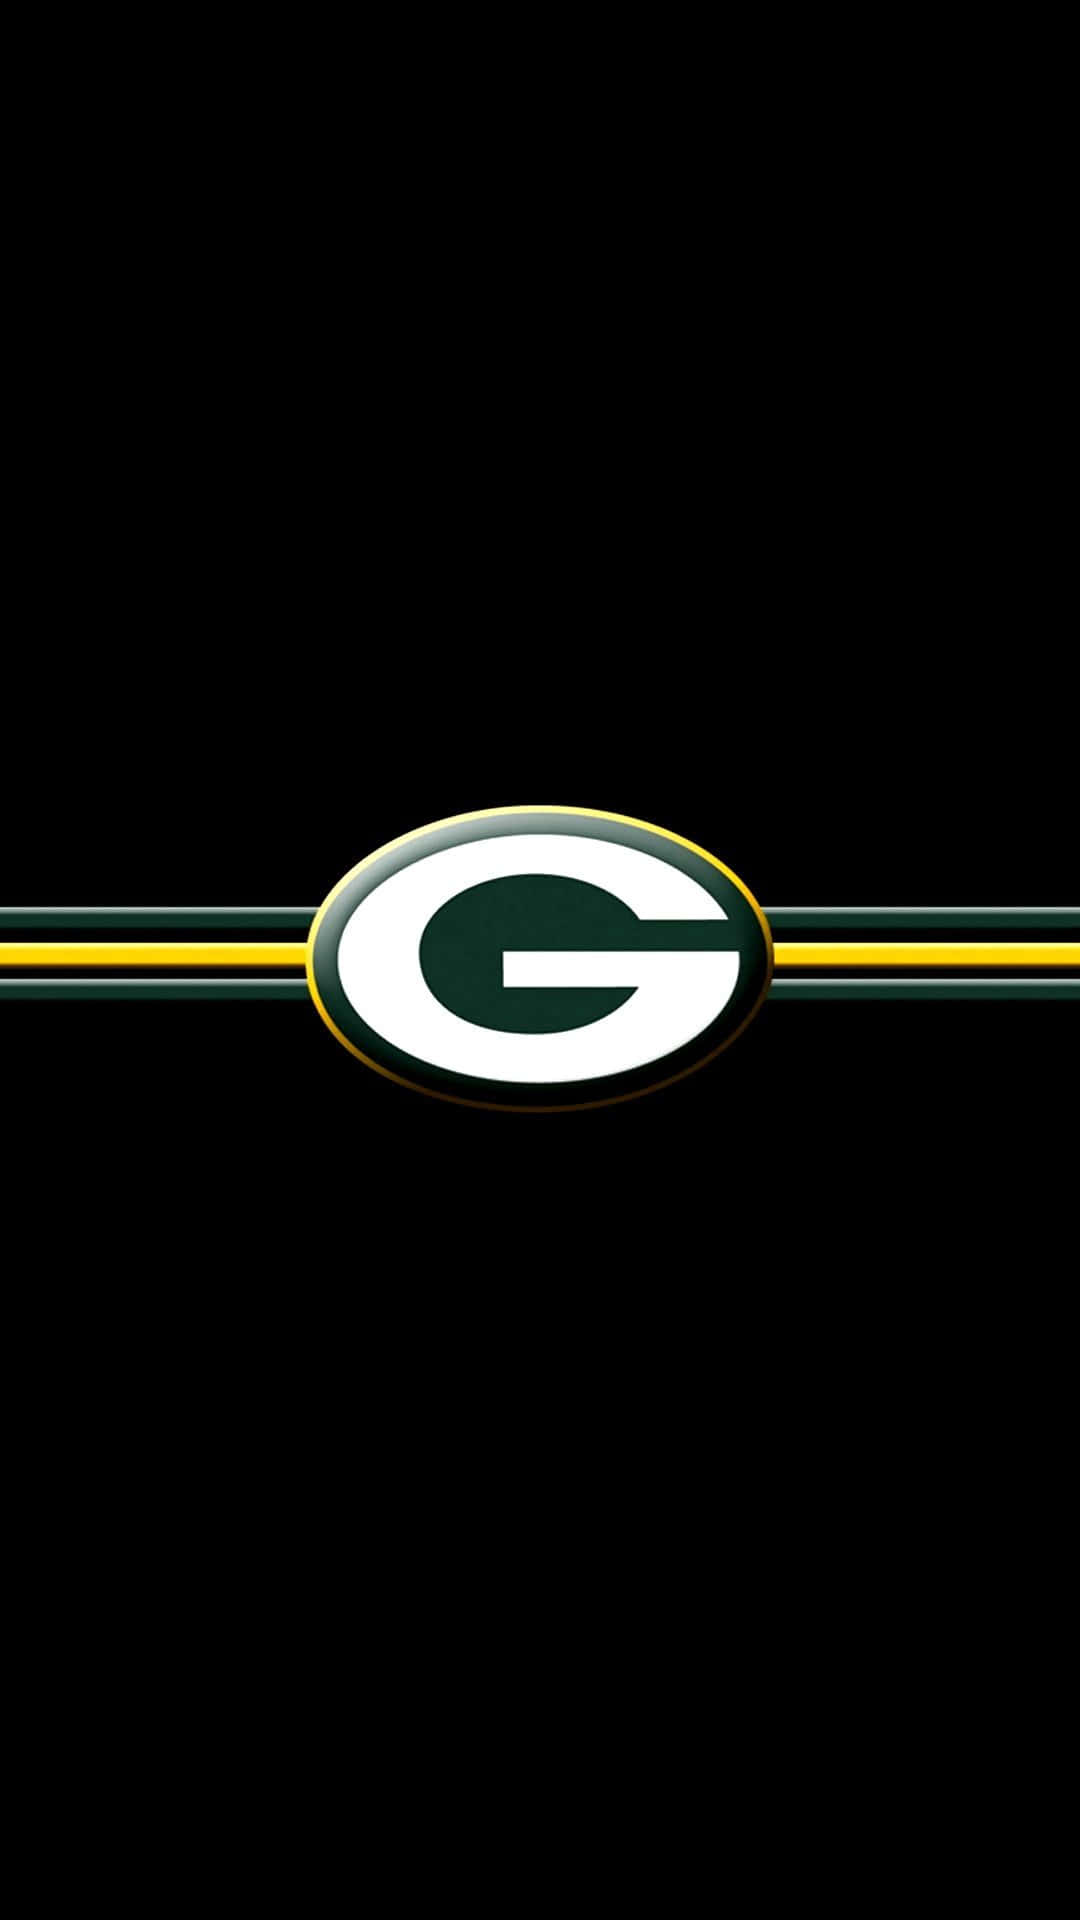 Green Bay Packers Spirit on Full Display